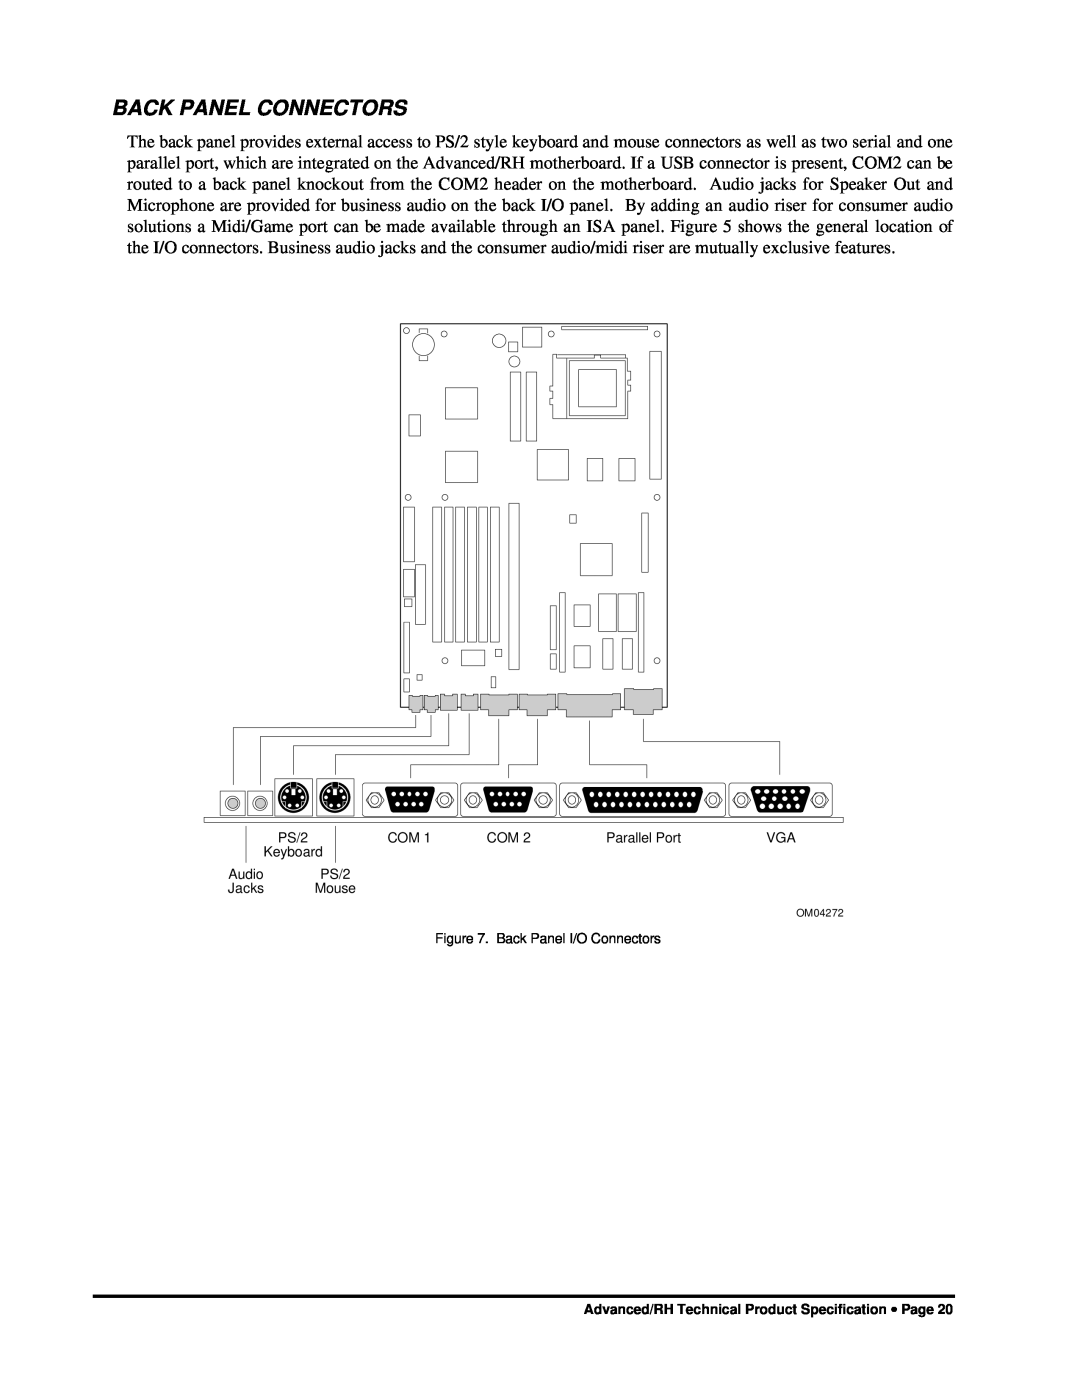 Intel 281809-003 Back Panel Connectors, PS/2 Keyboard, Parallel Port, Audio PS/2 Jacks Mouse, Back Panel I/O Connectors 